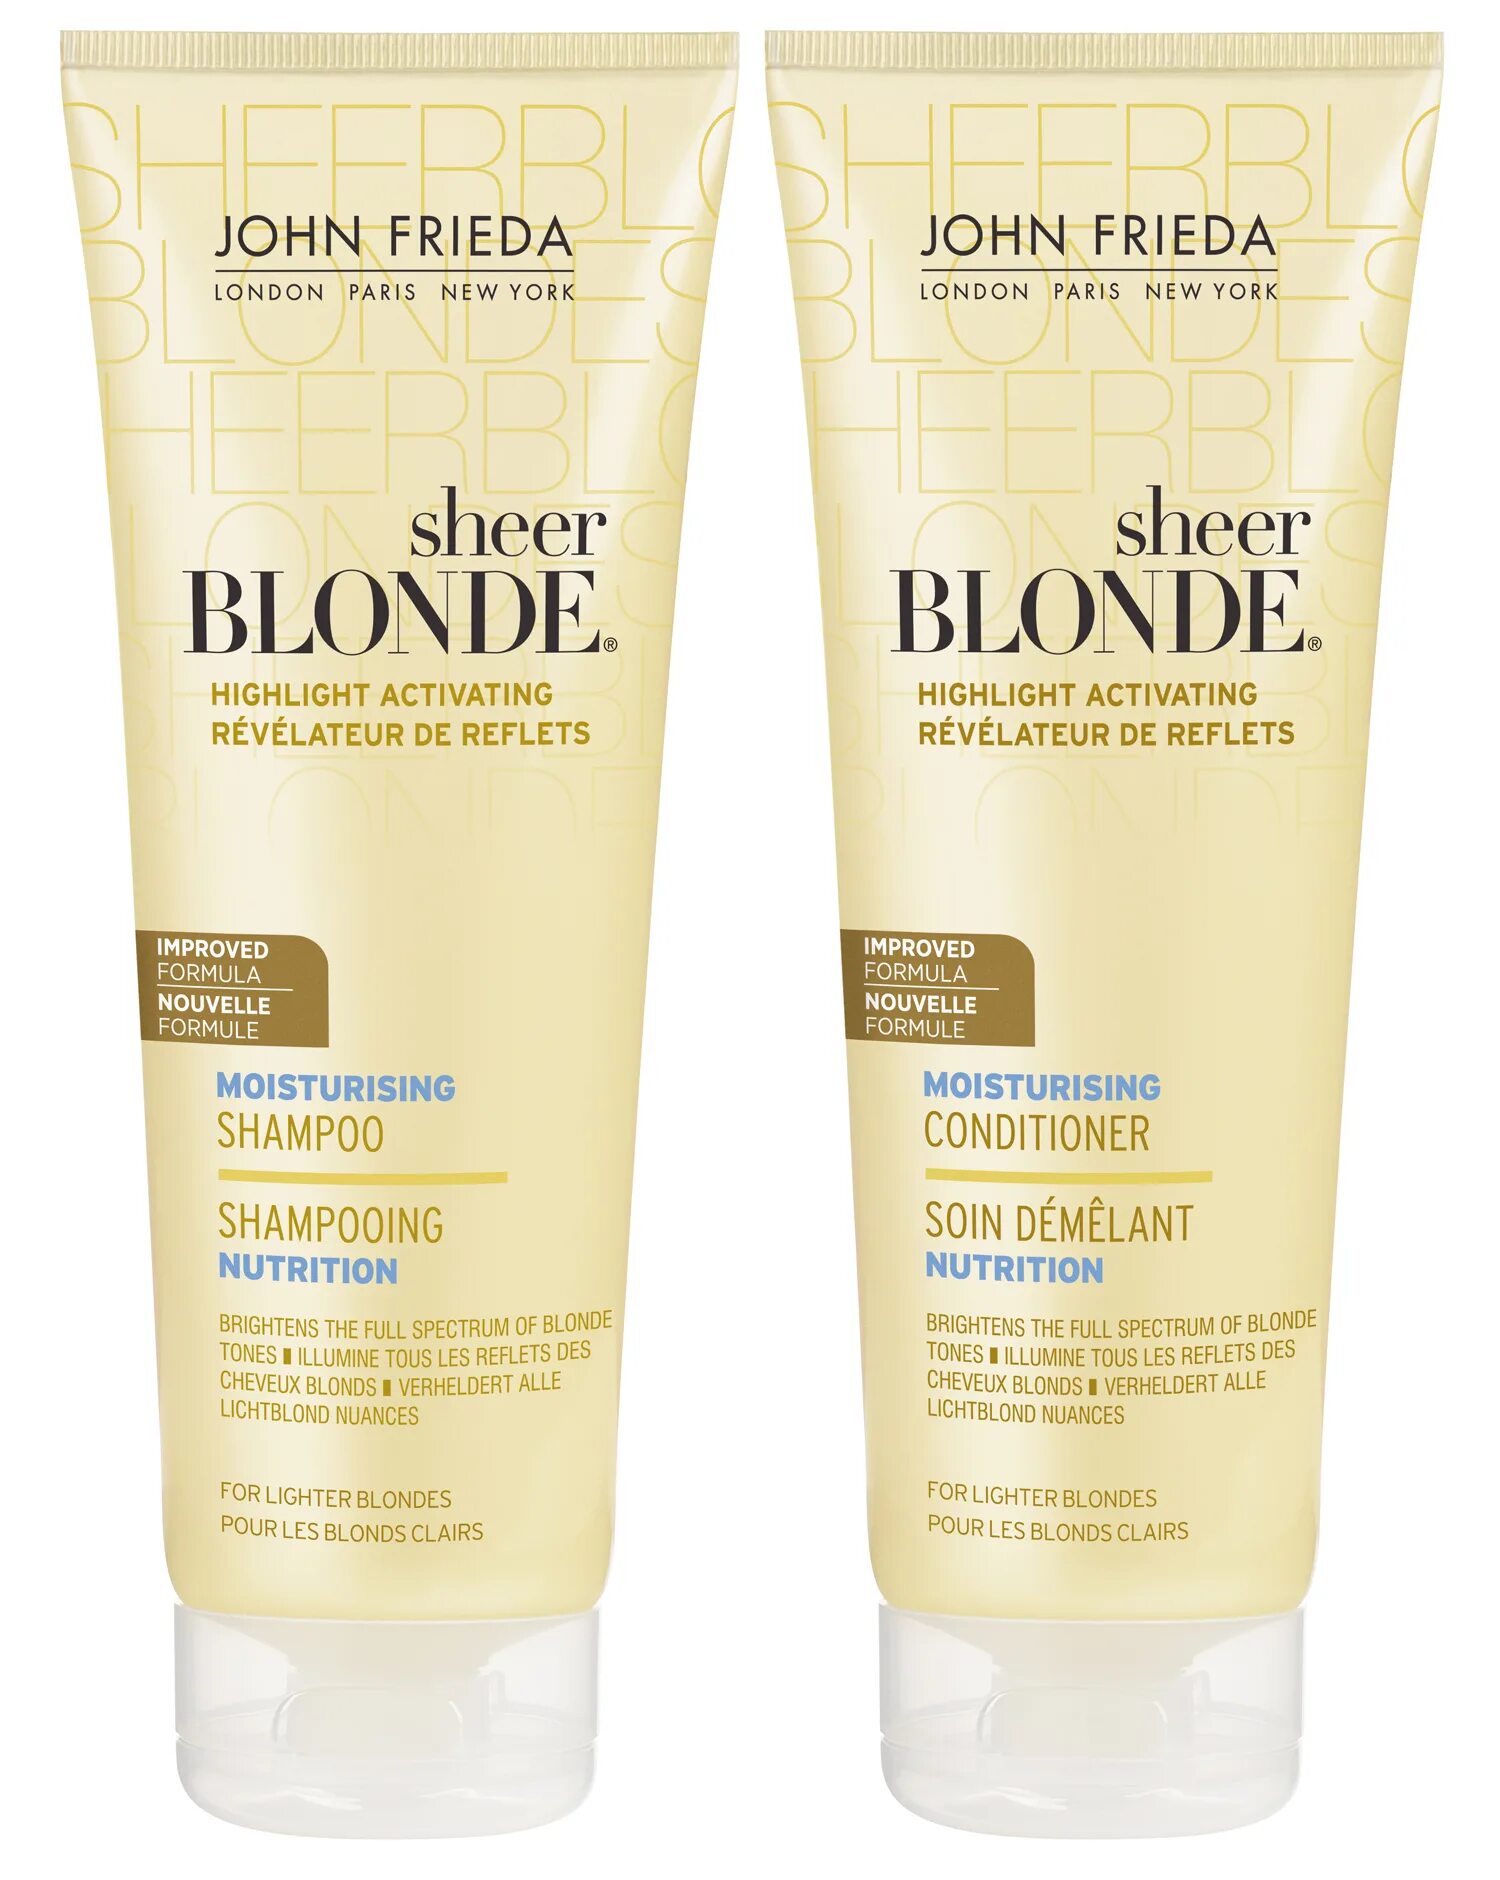 Sheer blonde. Шампунь для блондинок John Frieda. Sheer blonde увлажняющий шампунь.